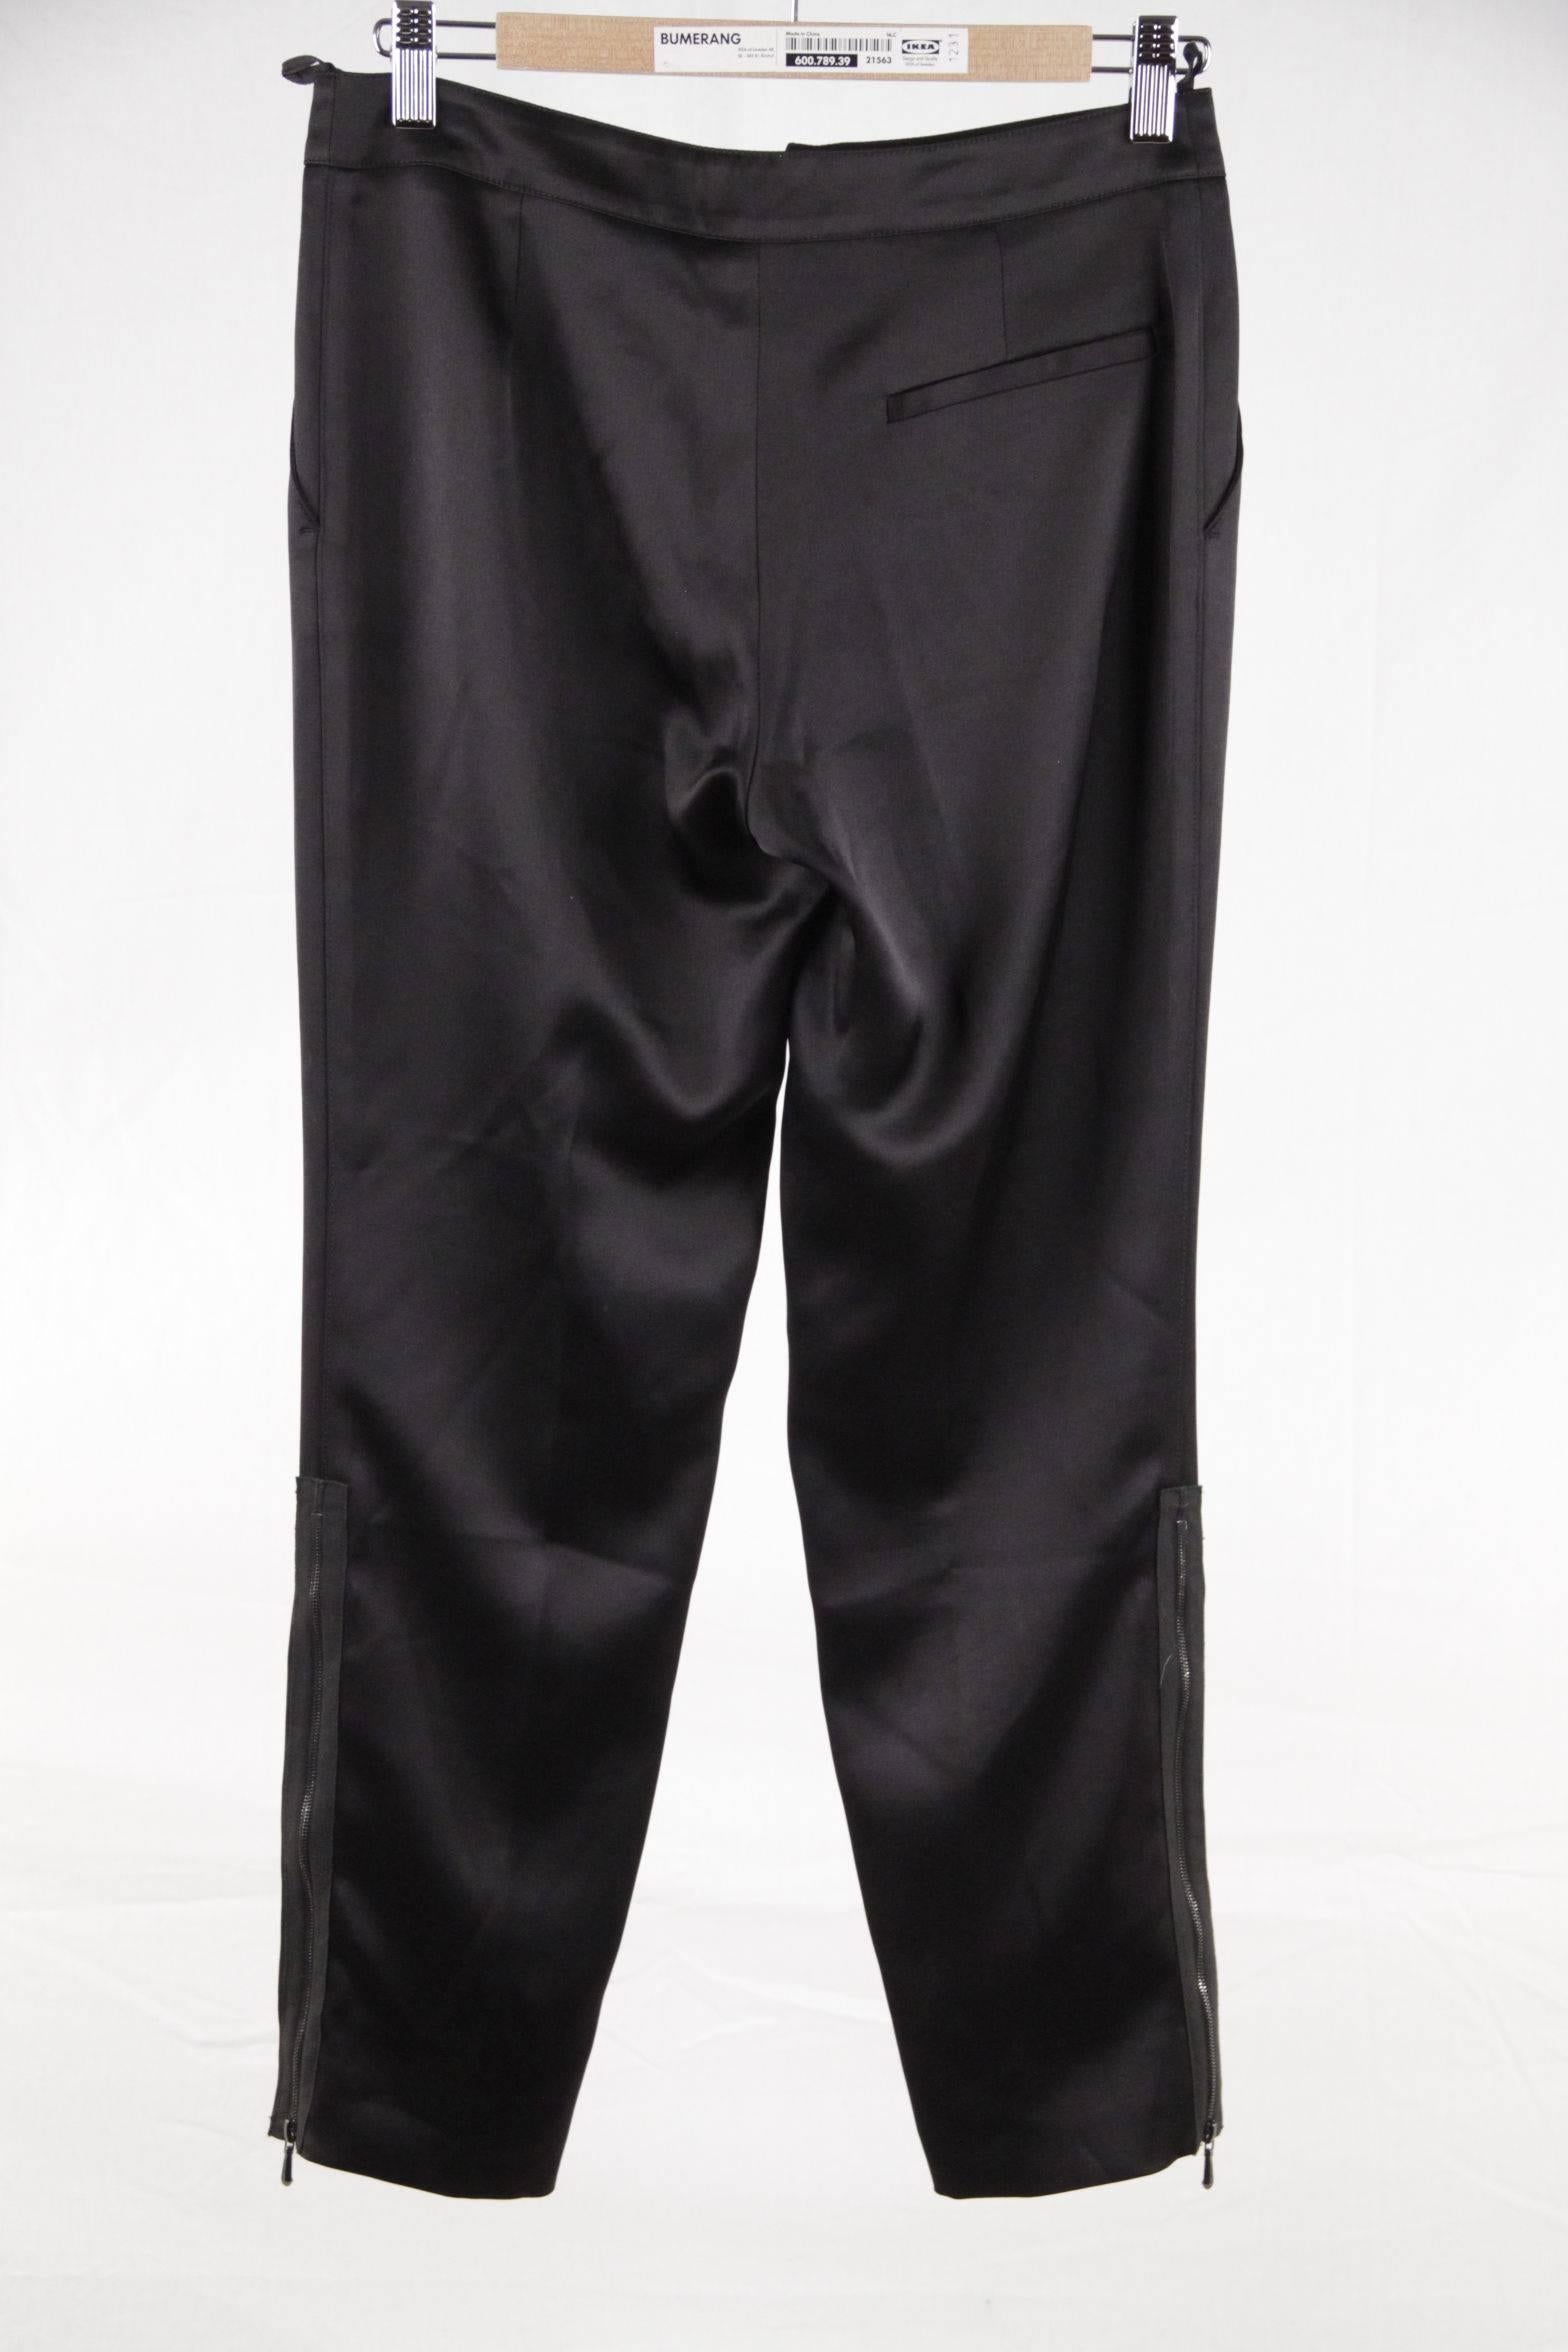 CHANEL Black Pure Silk PANTS Trousers w/ ZIP Detail SIZE 36 1